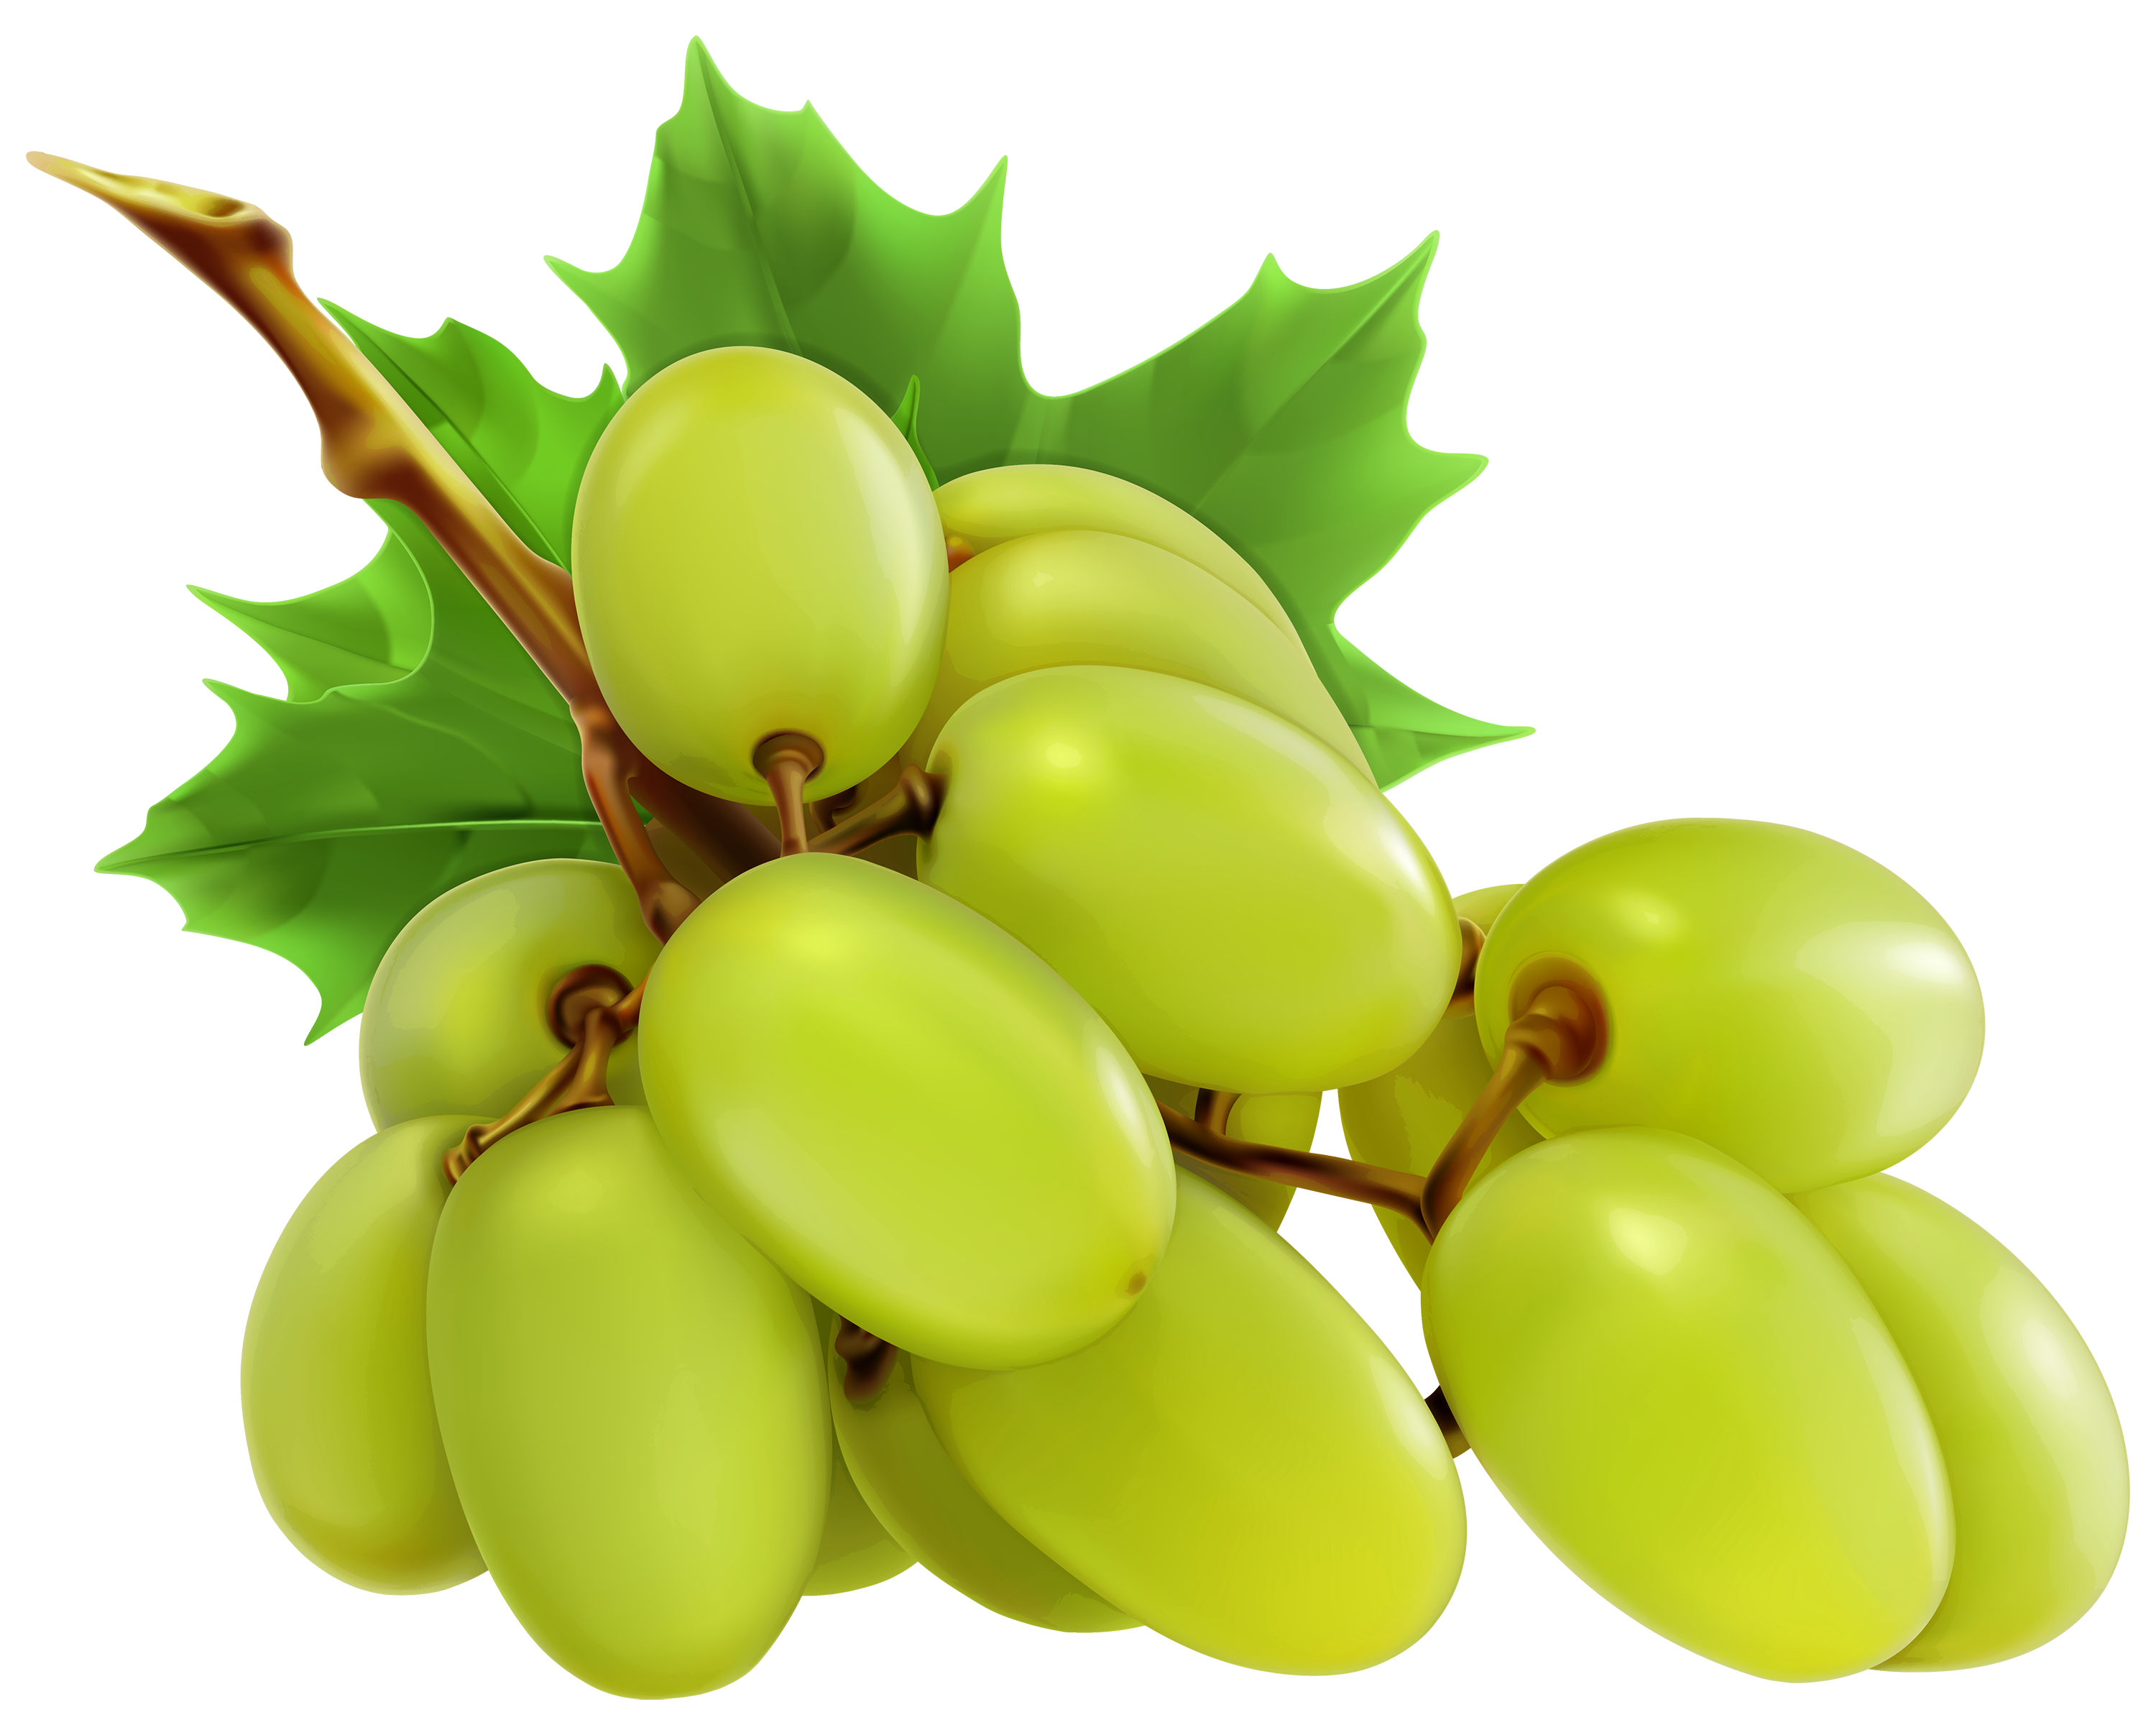 White grapes clipart 